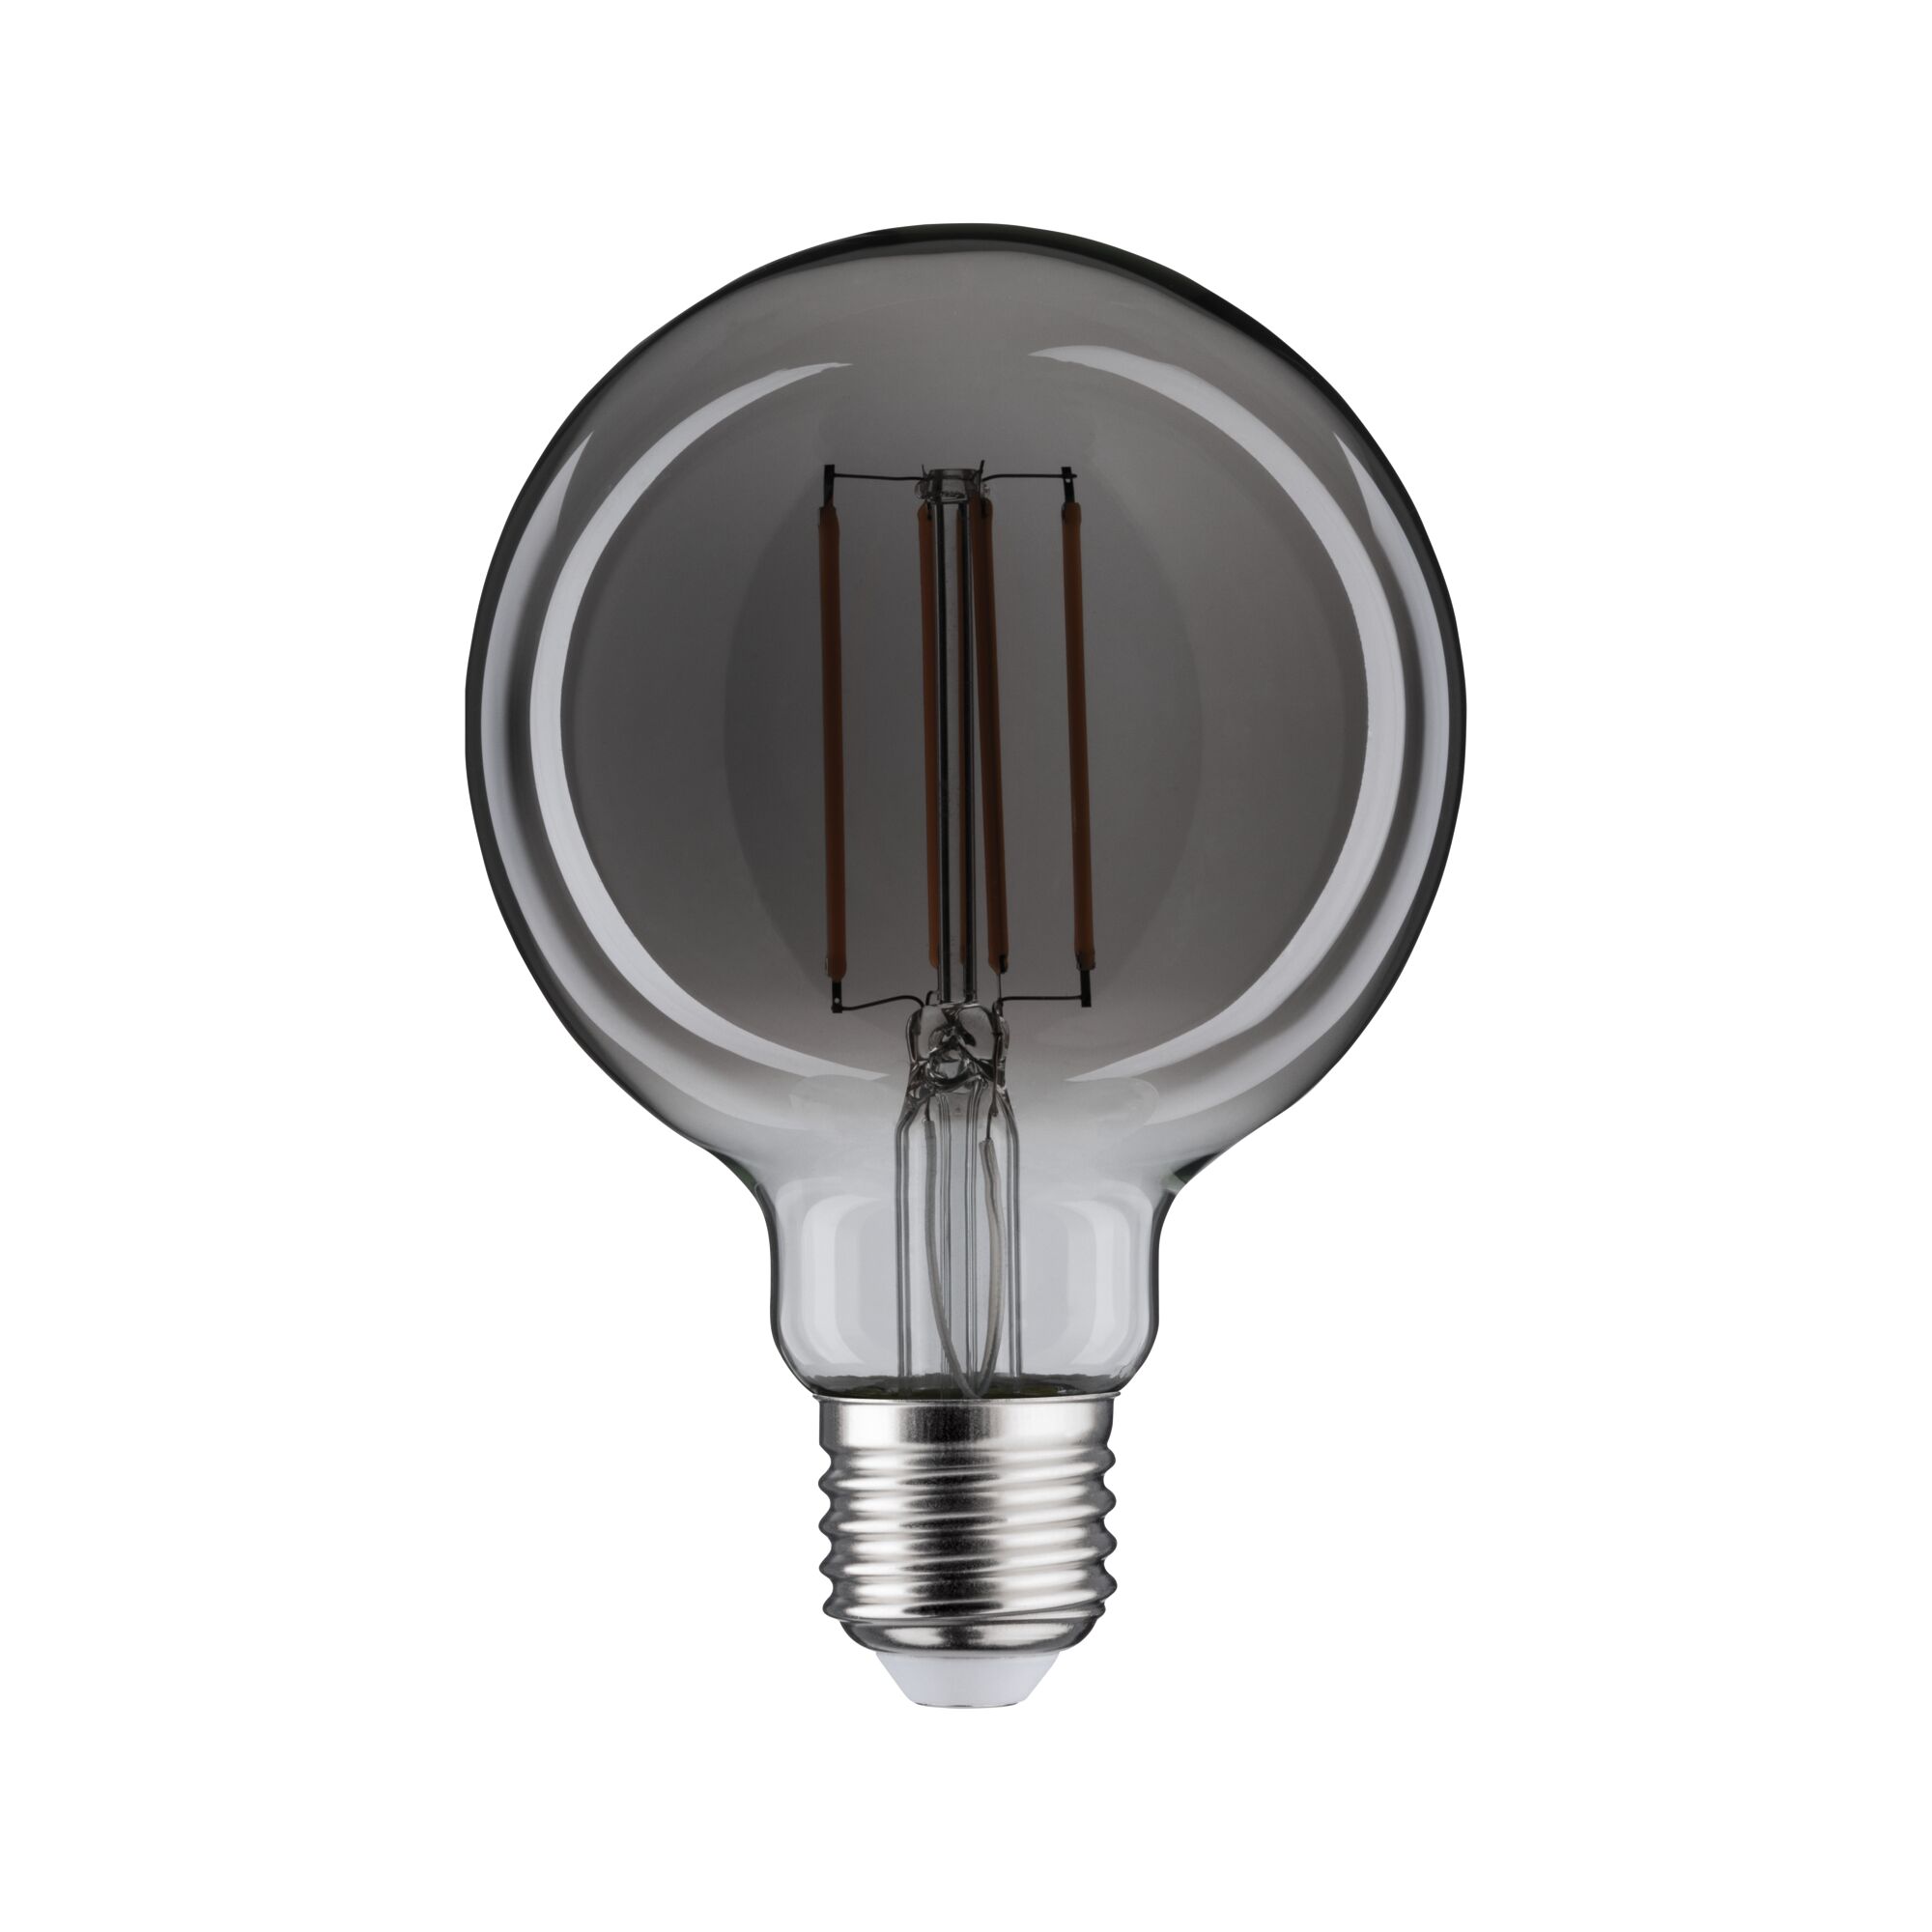 Rauchglas extra Paulmann Vintage retro dimmbare Filament 28865 E27 8W warmweiß LED Globe